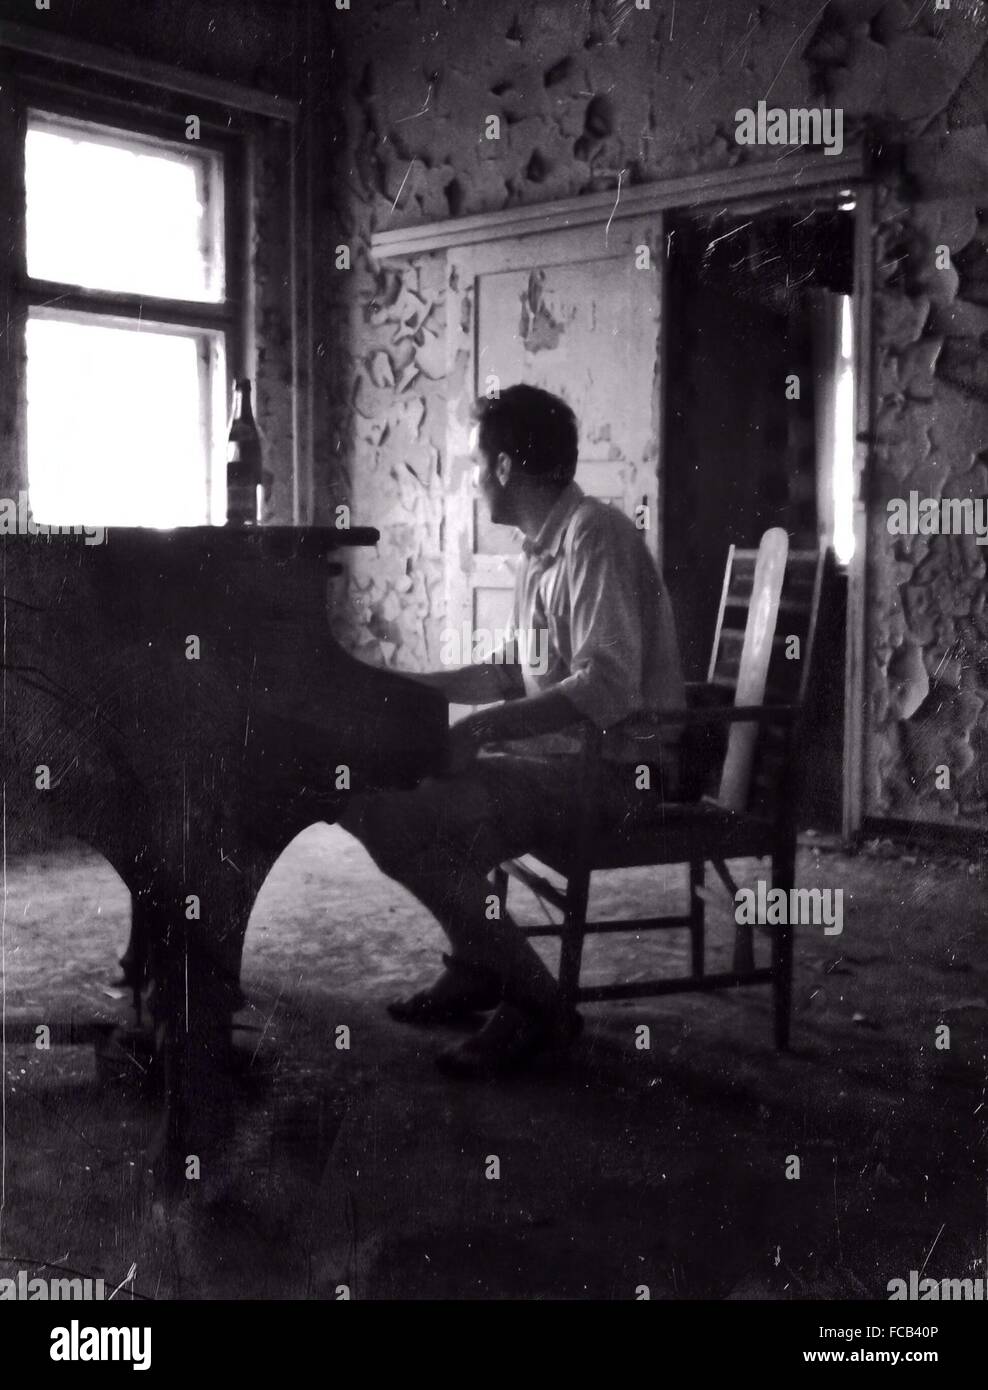 La longitud total del pianista tocando el piano en casa abandonada Foto de stock